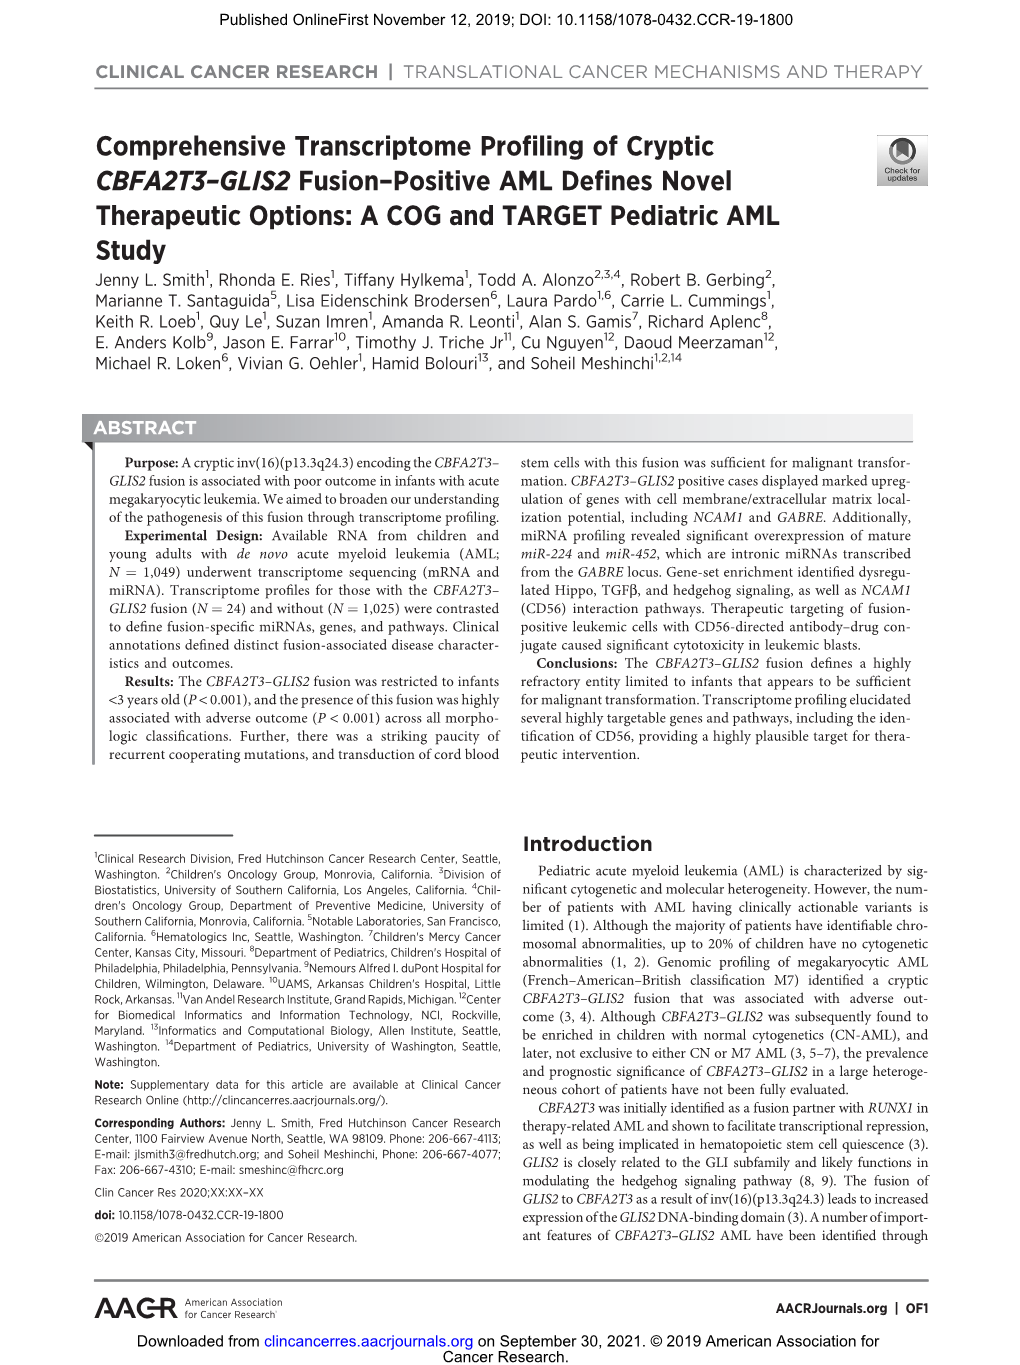 Comprehensive Transcriptome Profiling of Cryptic CBFA2T3 −GLIS2 Fusion−Positive AML Defines Novel Therapeutic Options: a COG and TARGET Pediatric AML Study